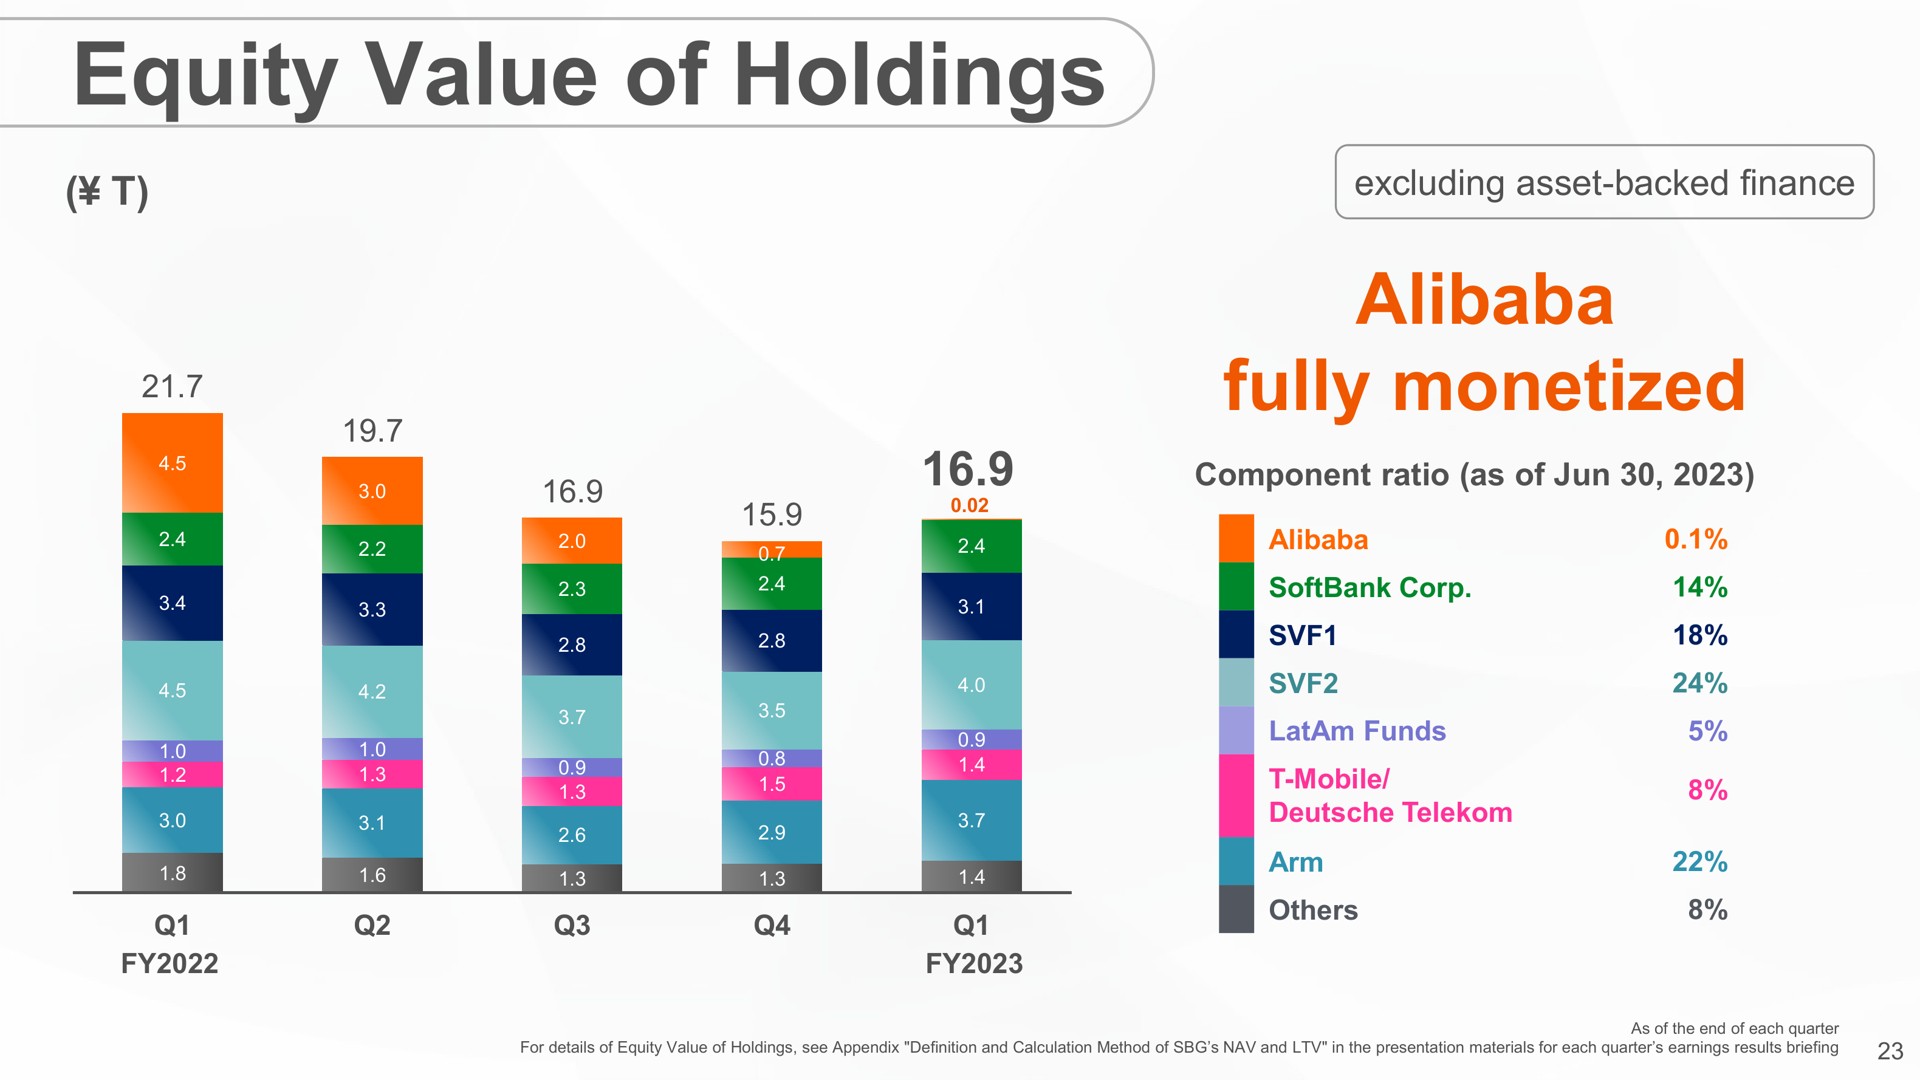 equity value of holdings fully monetized | SoftBank